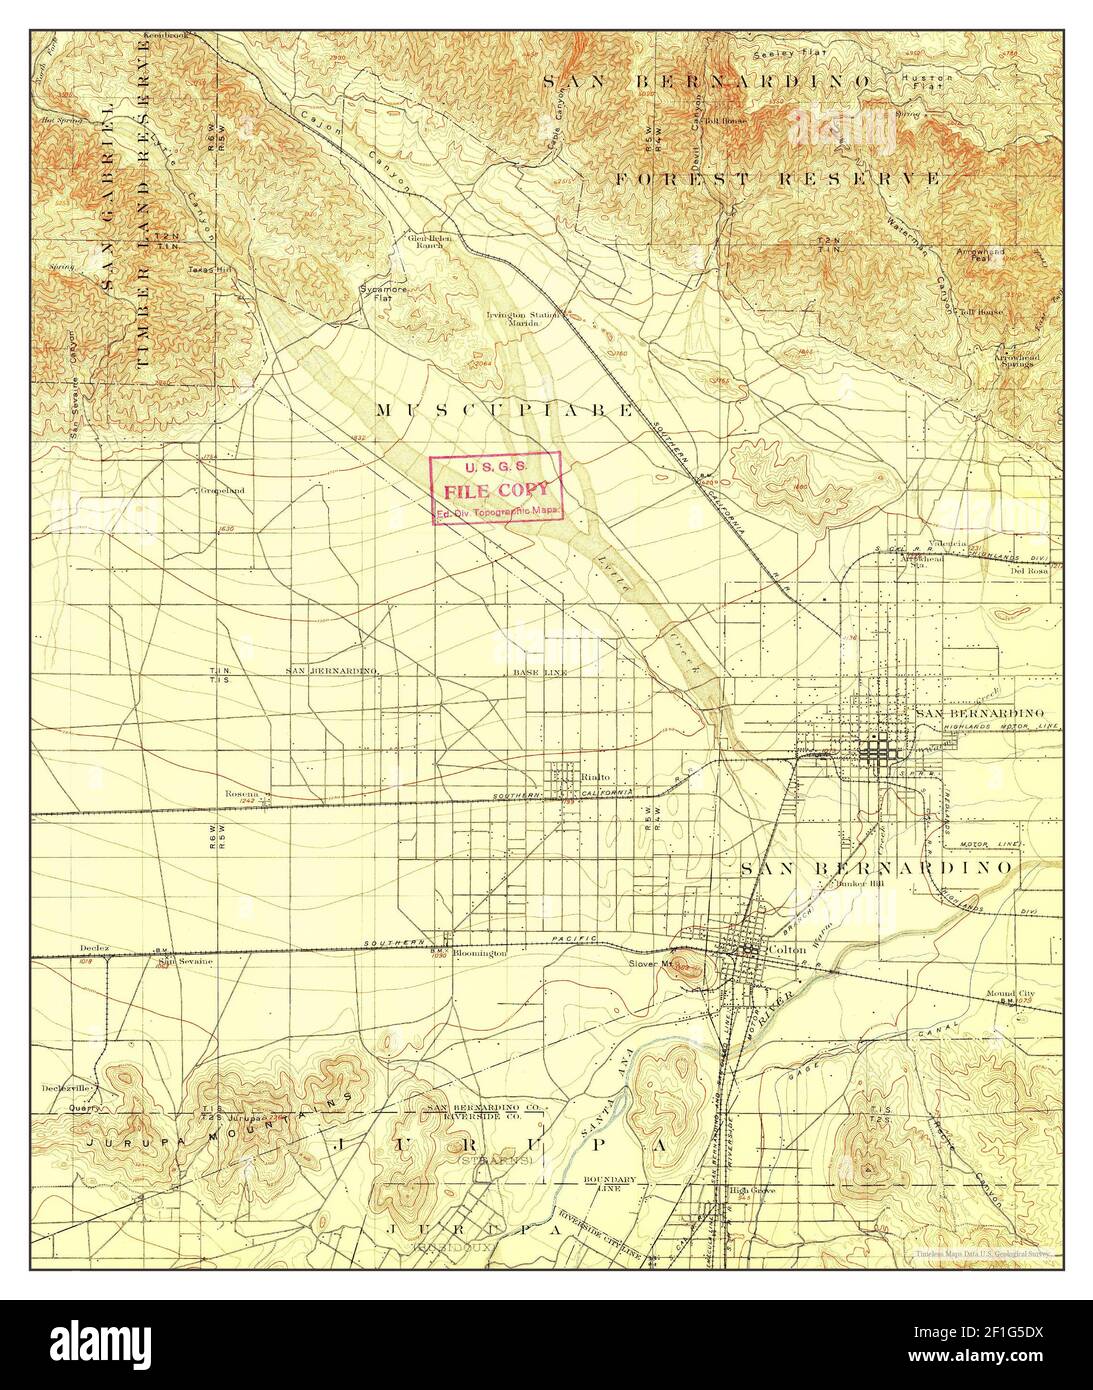 San Bernardino, California, map 1901, 1:62500, United States of America by Timeless Maps, data U.S. Geological Survey Foto Stock